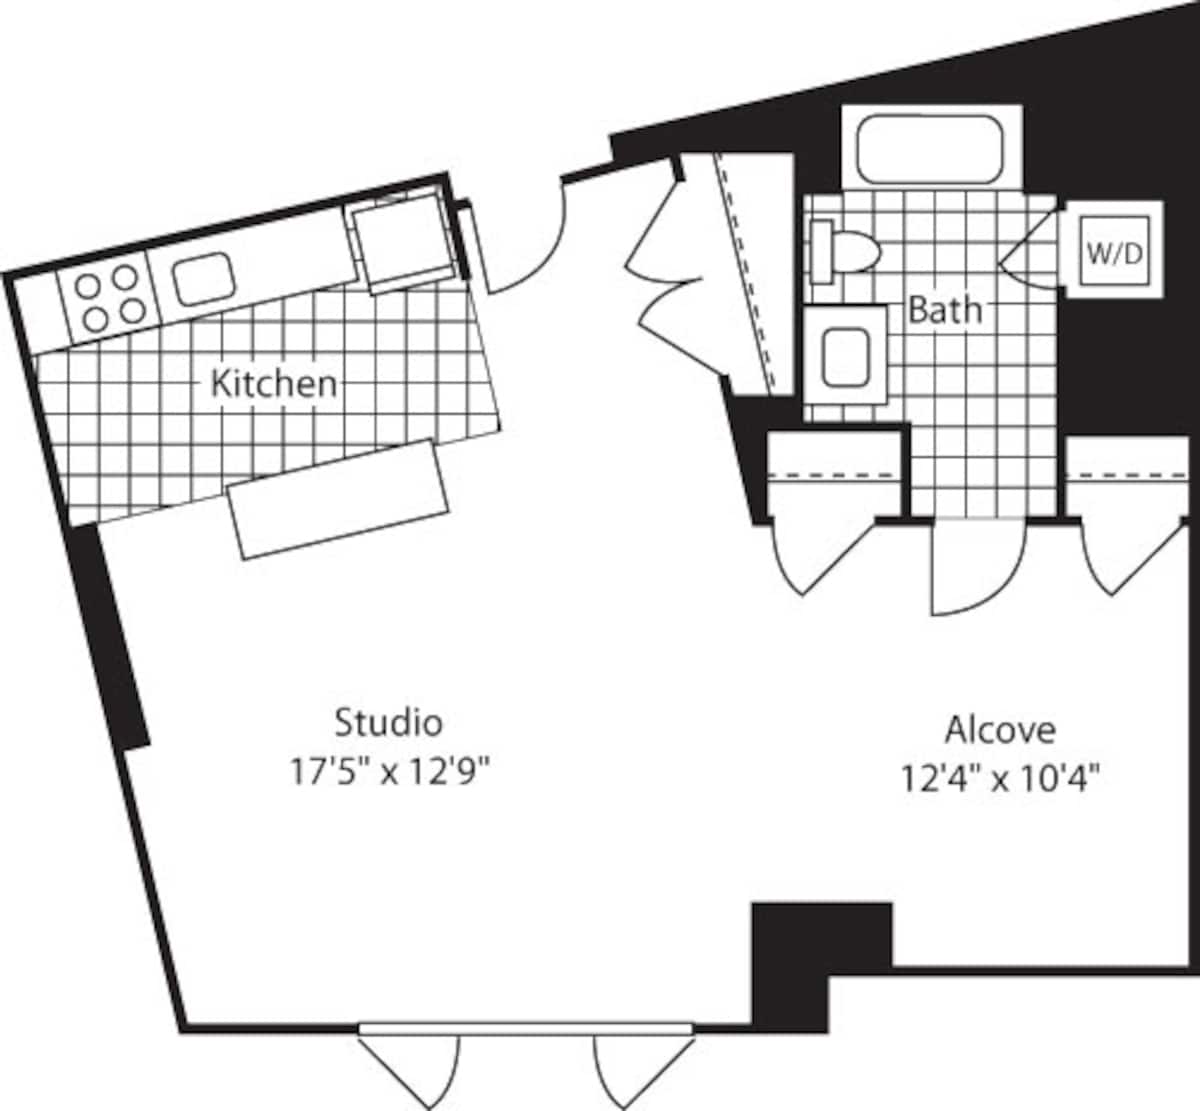 Floorplan diagram for Studio (North) - 645, showing Studio